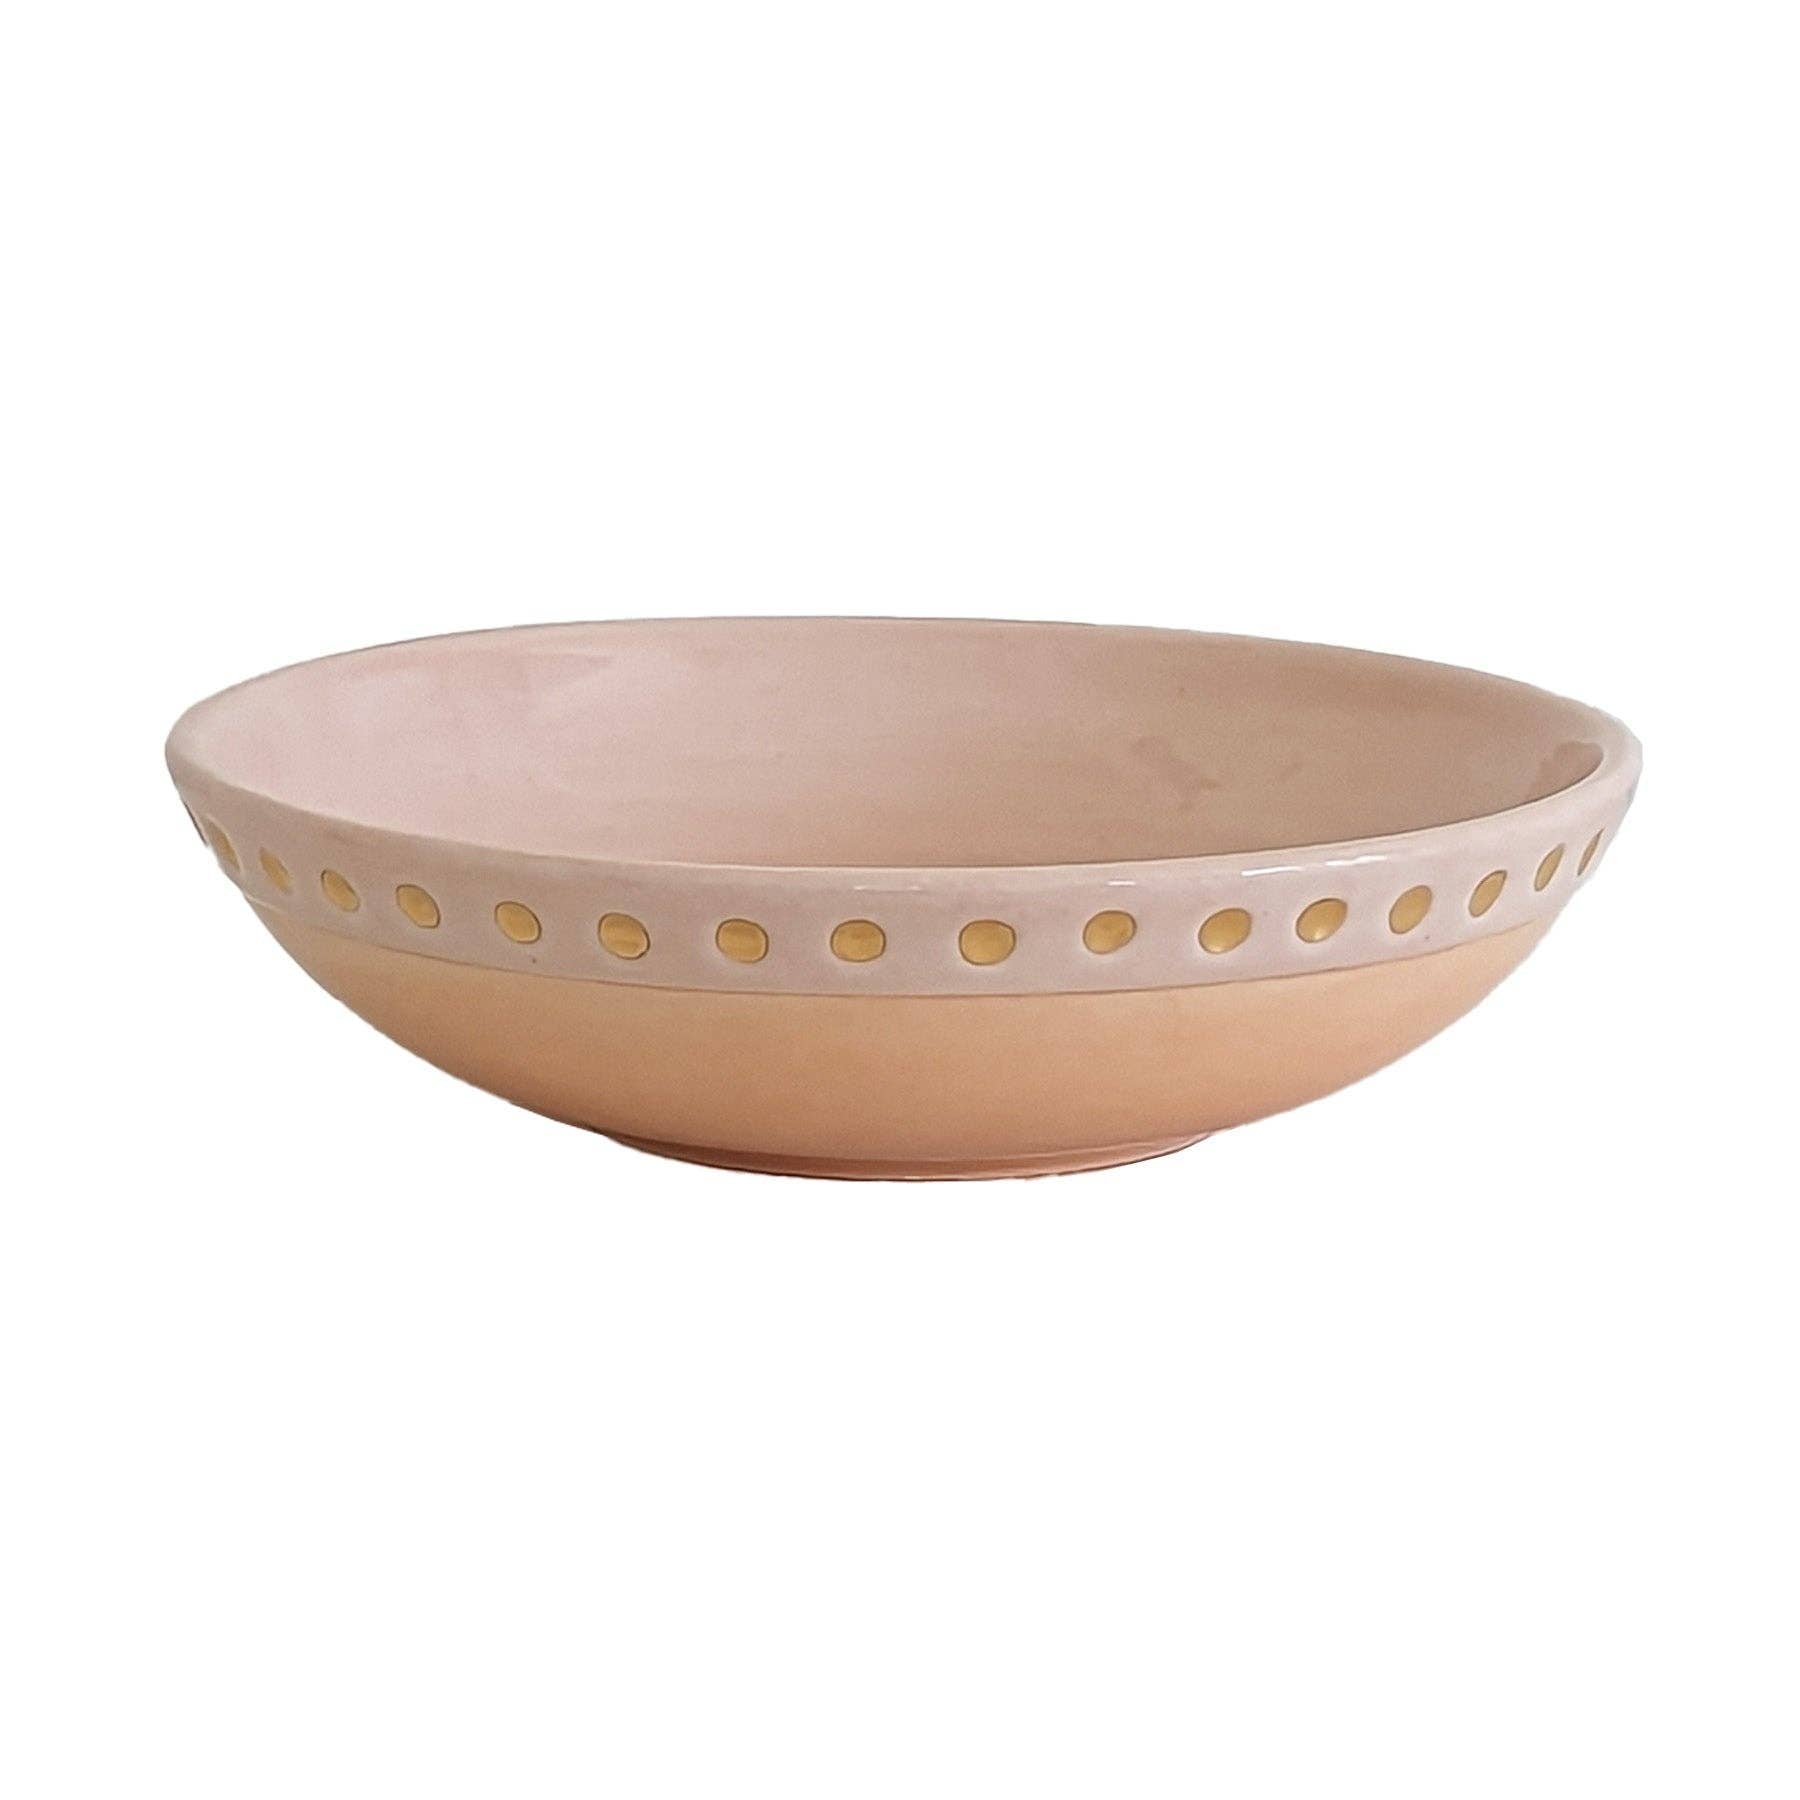 Goddess Bowl with 22K Gold Accent: Bowl / Blush